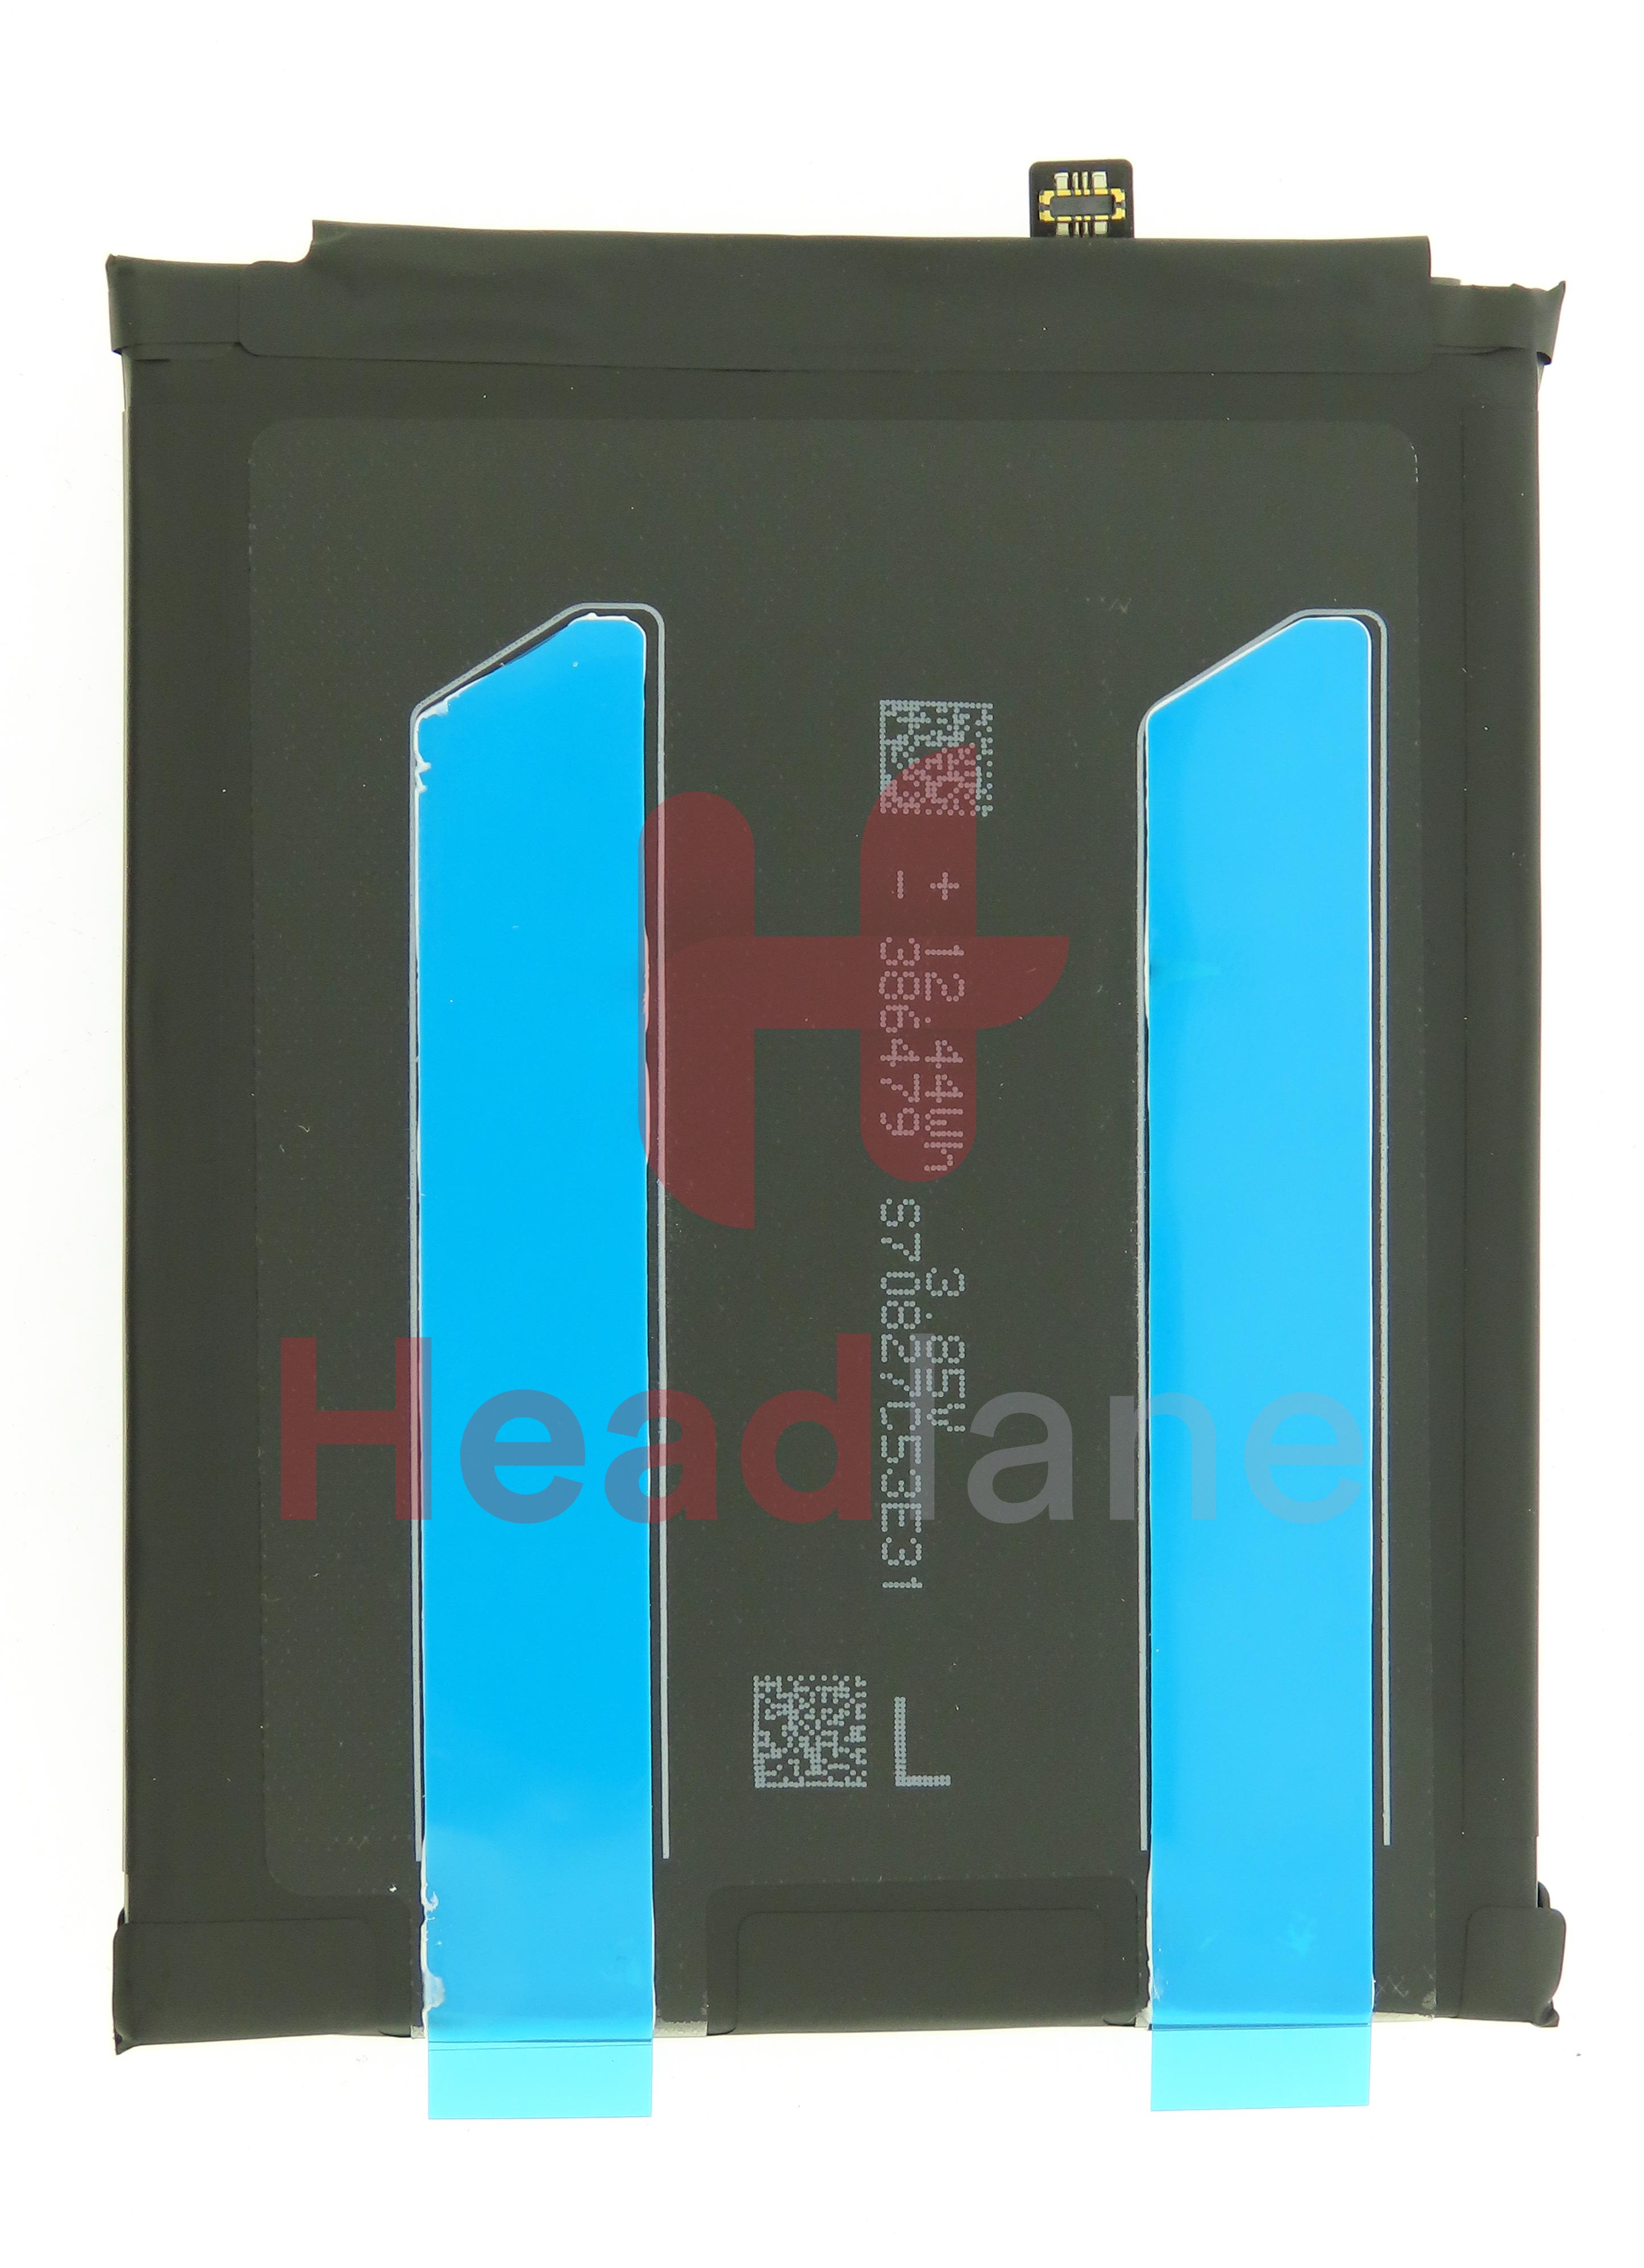 Xiaomi Redmi 5 BN35 Internal Battery 3300mAh